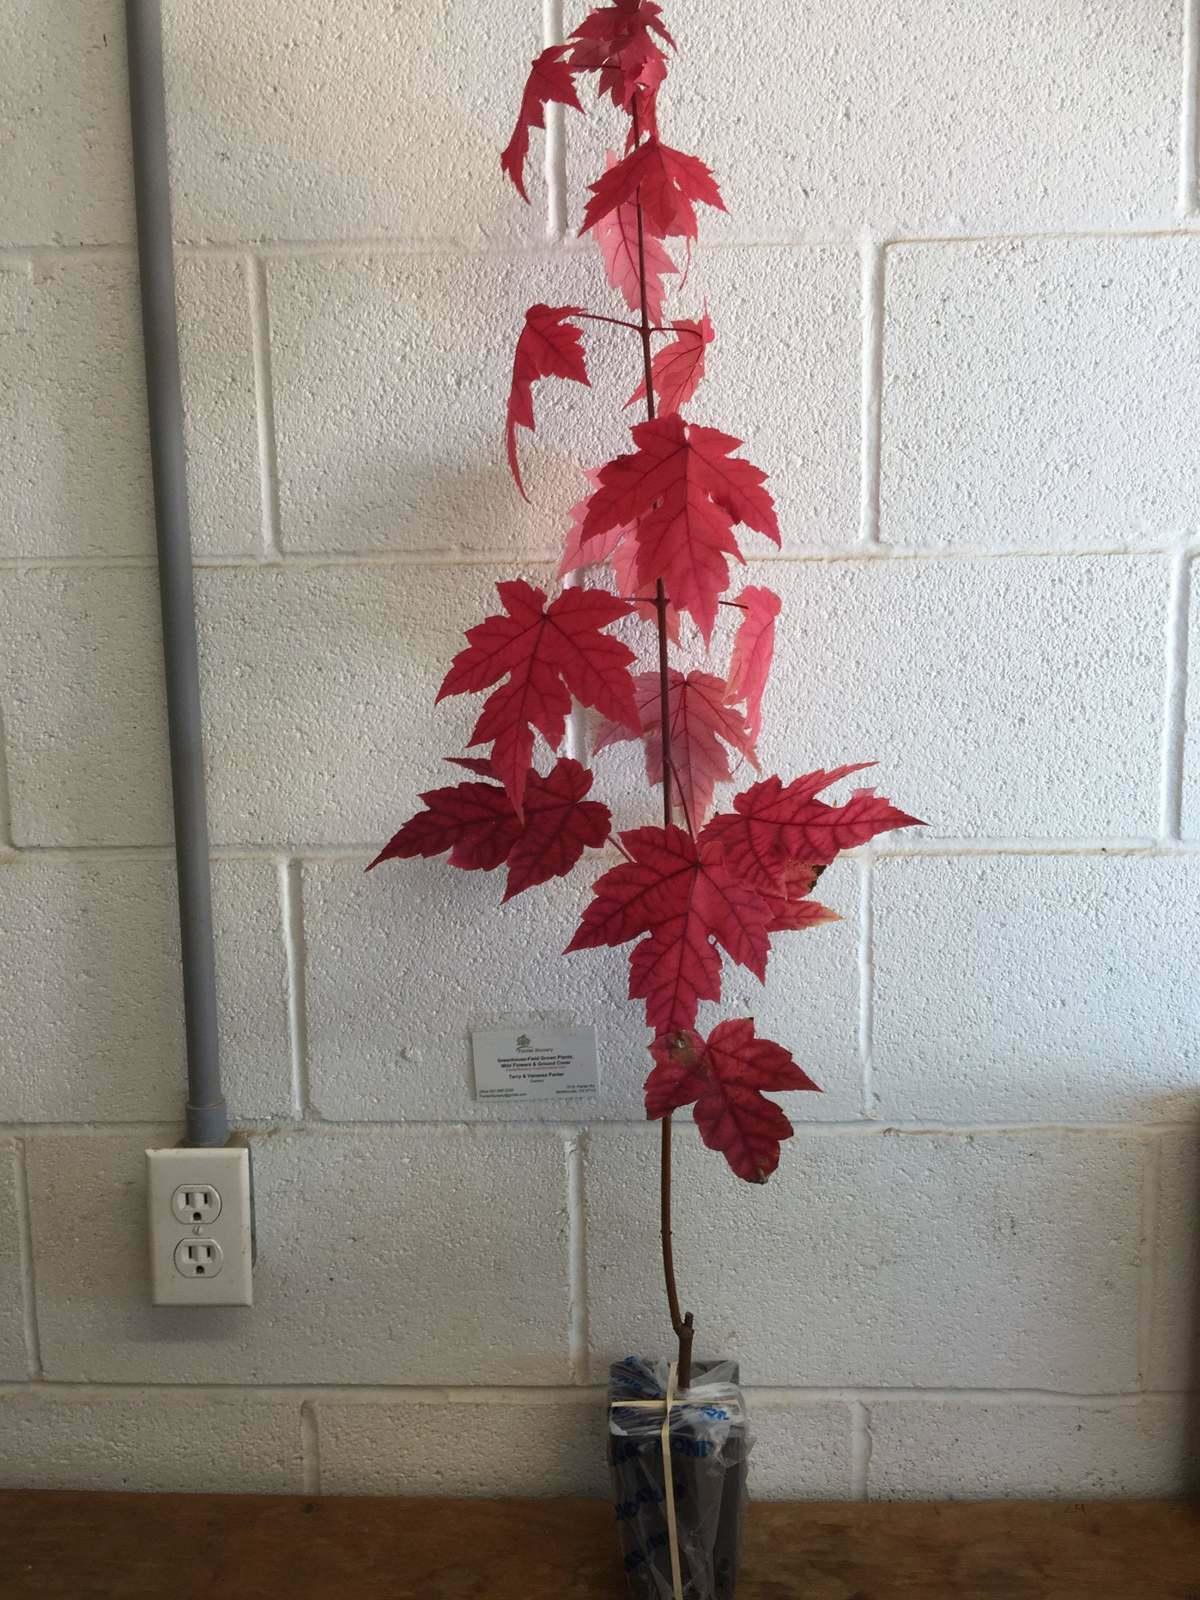 2 Autumn Blaze Maple Trees - Live Plants - 12-24" Tall Seedlings - Quart Pots - The Nursery Center